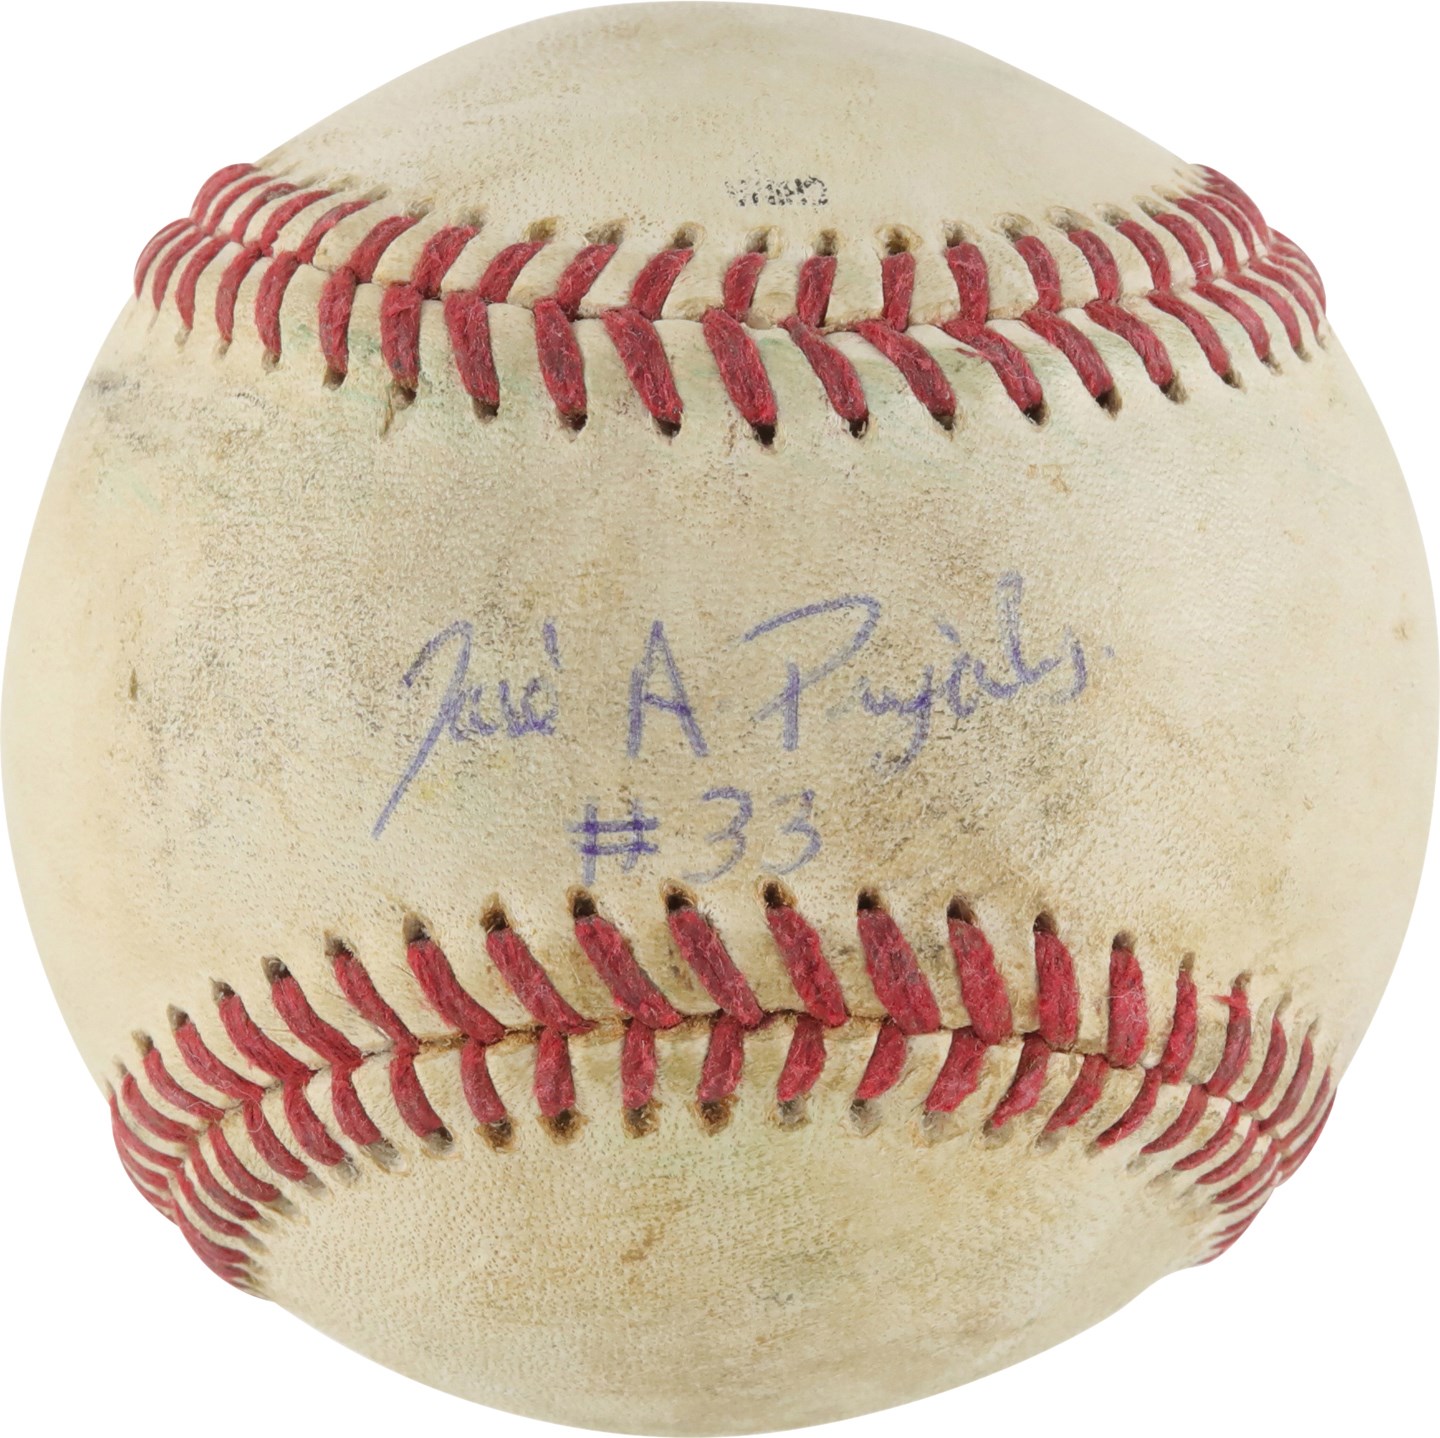 - 1999 Earliest Known Albert Pujols Single-Signed Ball - Rare Full Name Signature! (JSA)